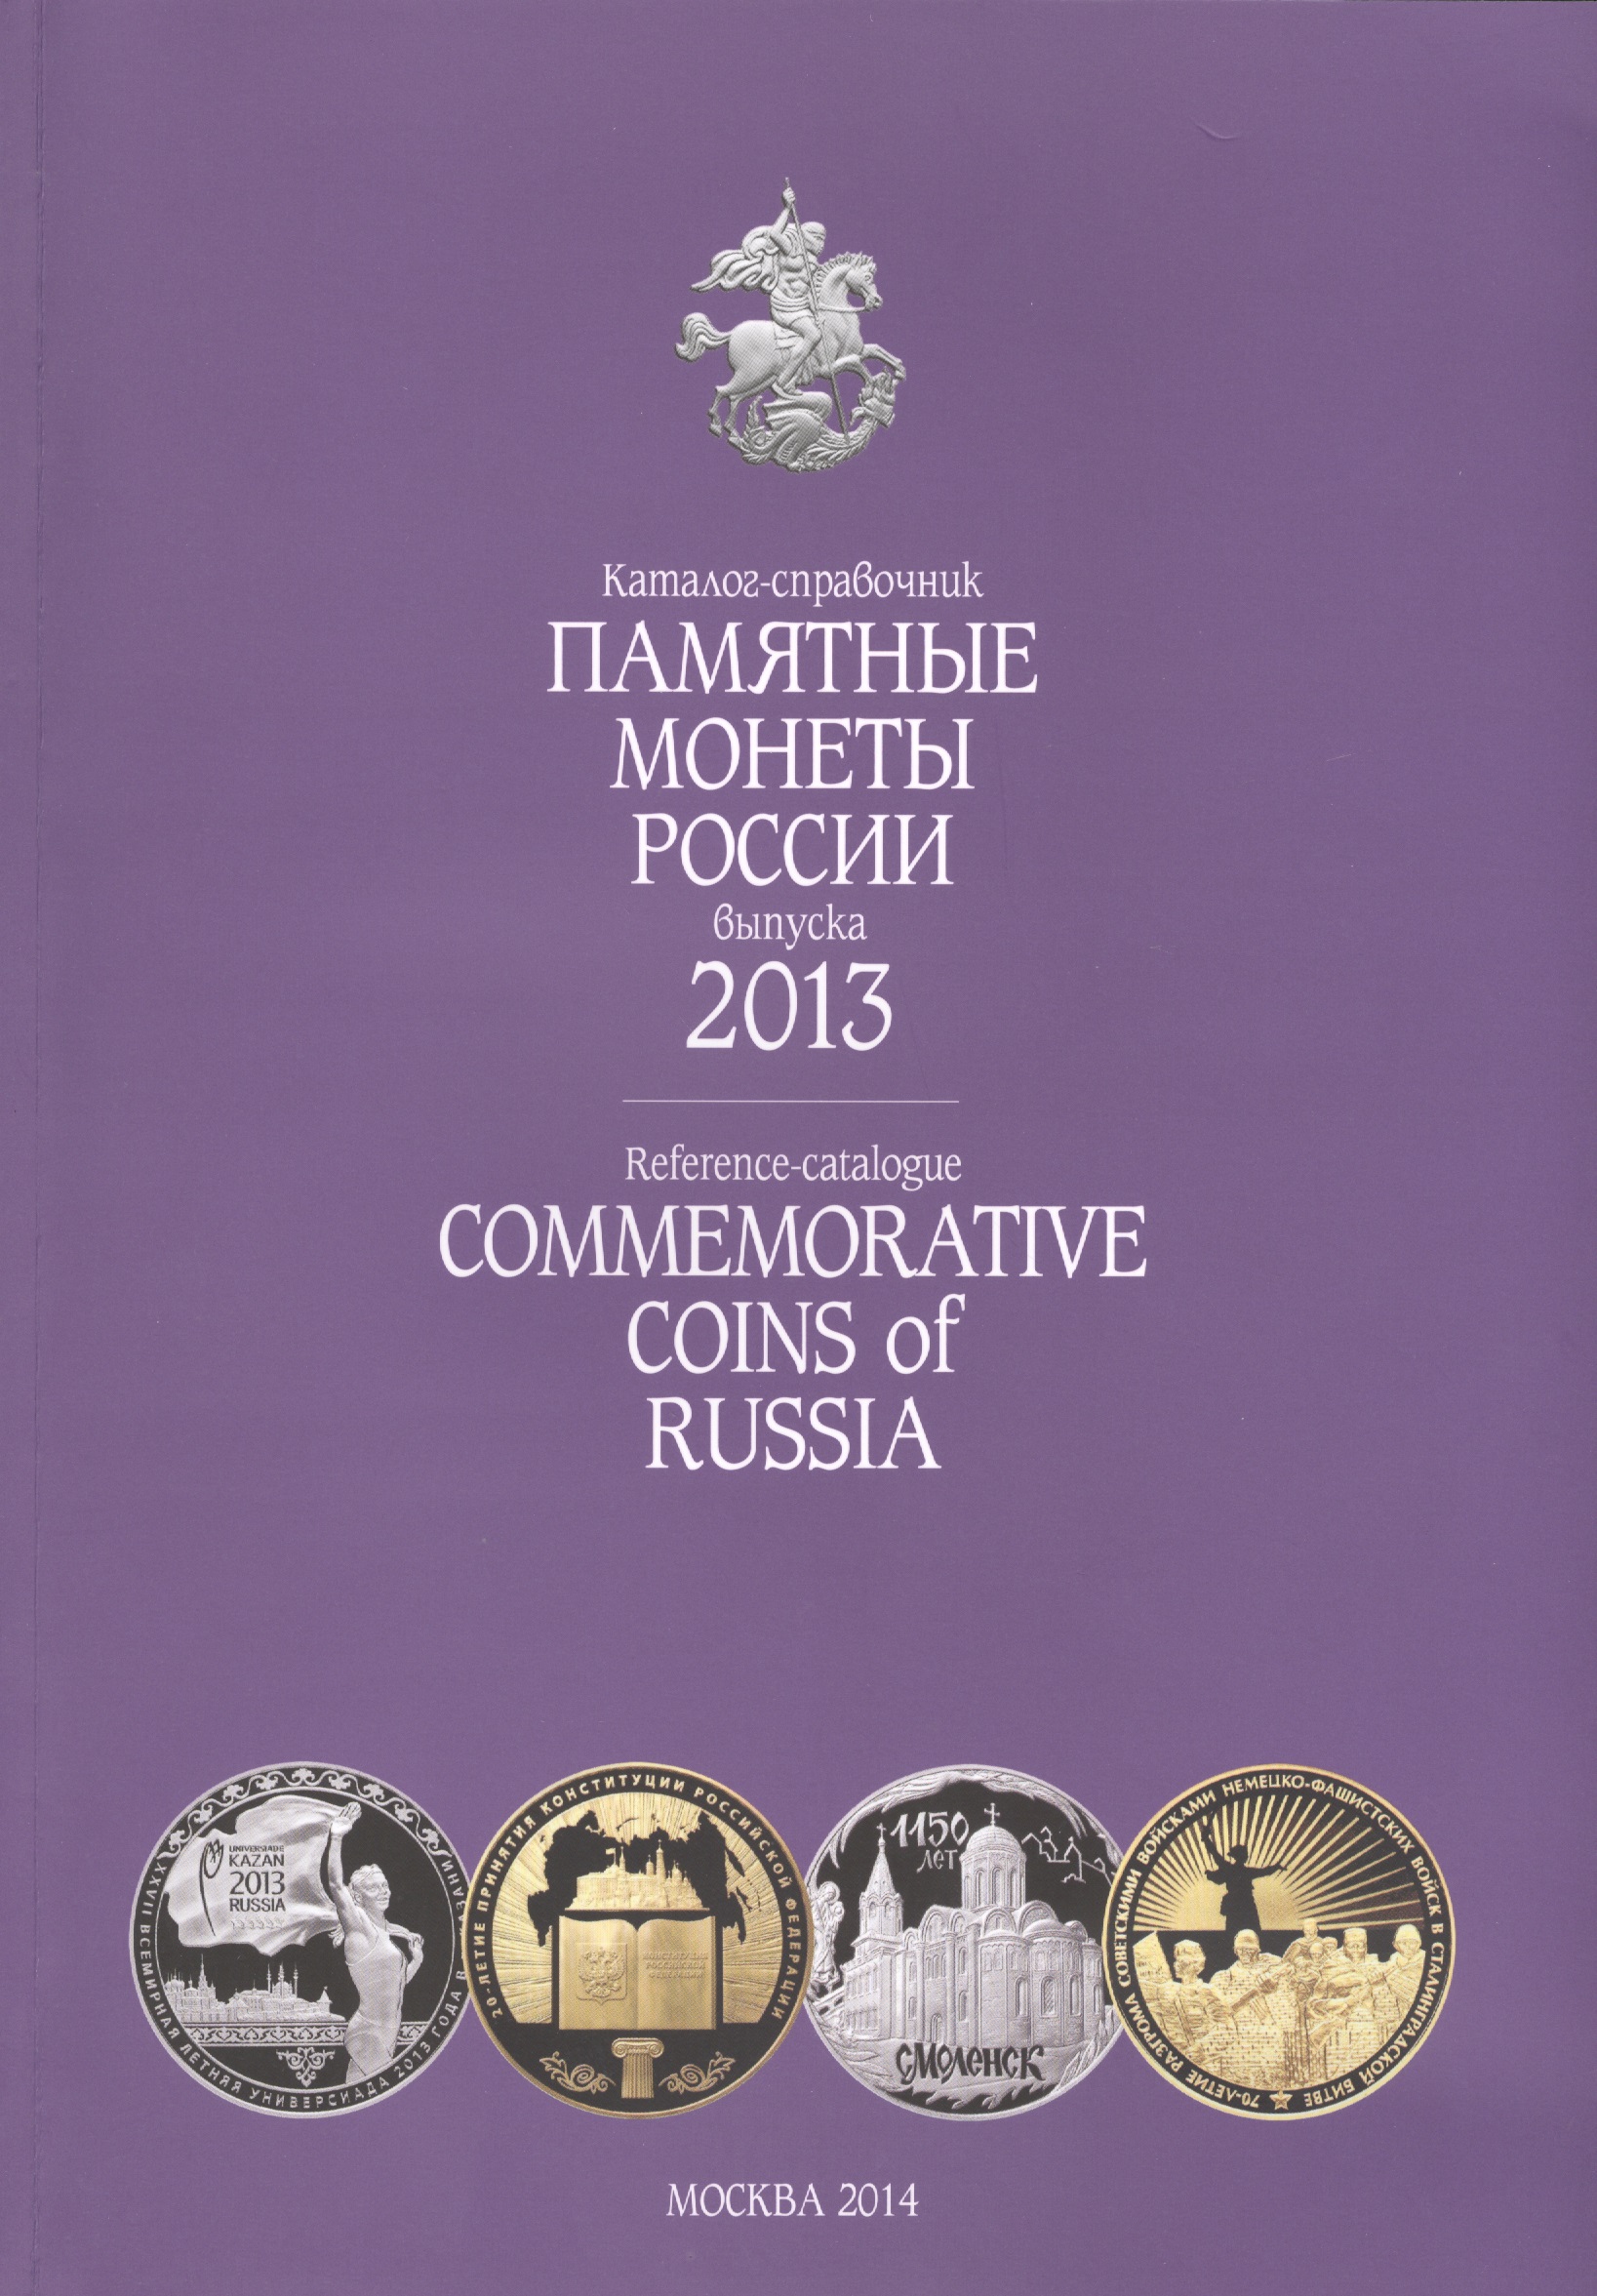 -.2013 .    .Commemorative coins of Russia